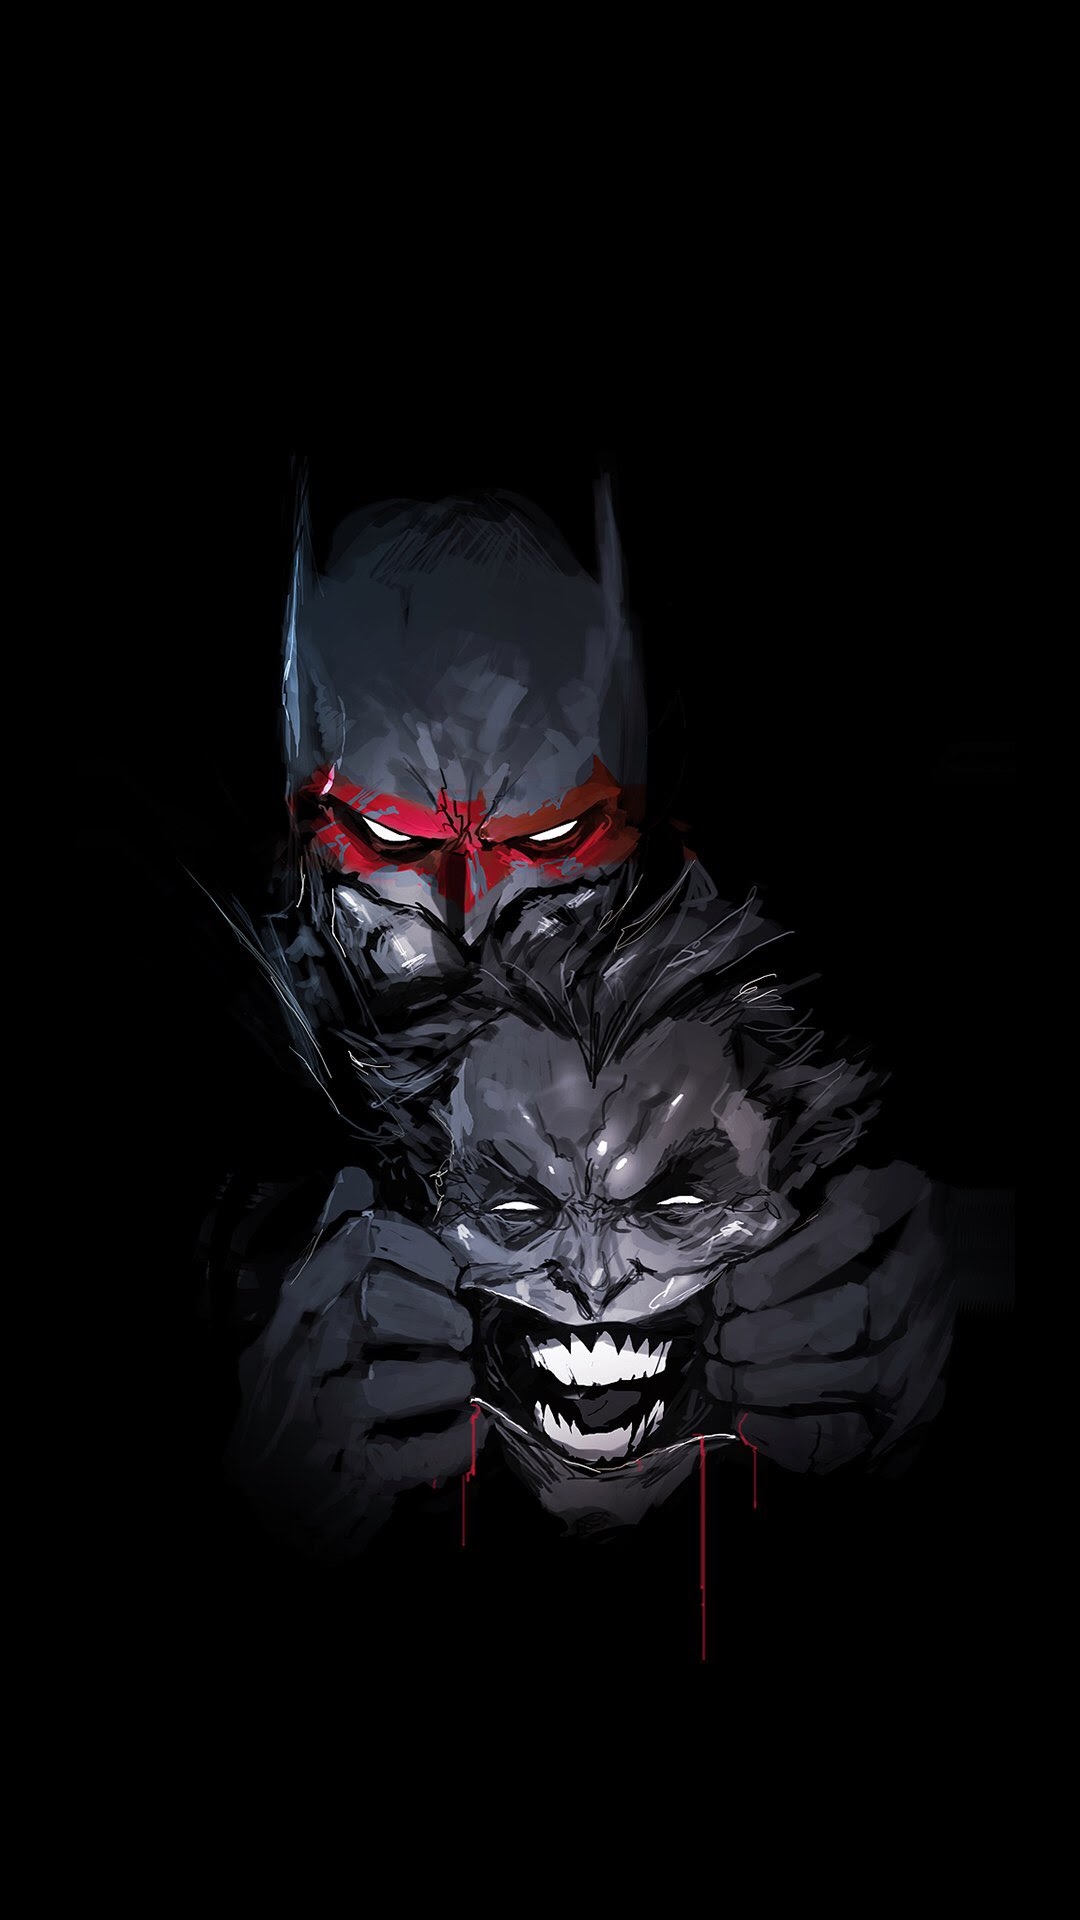 DC动漫人物<span style='color:red;'>蝙蝠侠</span>和死敌小丑的创意手绘插画手机壁纸